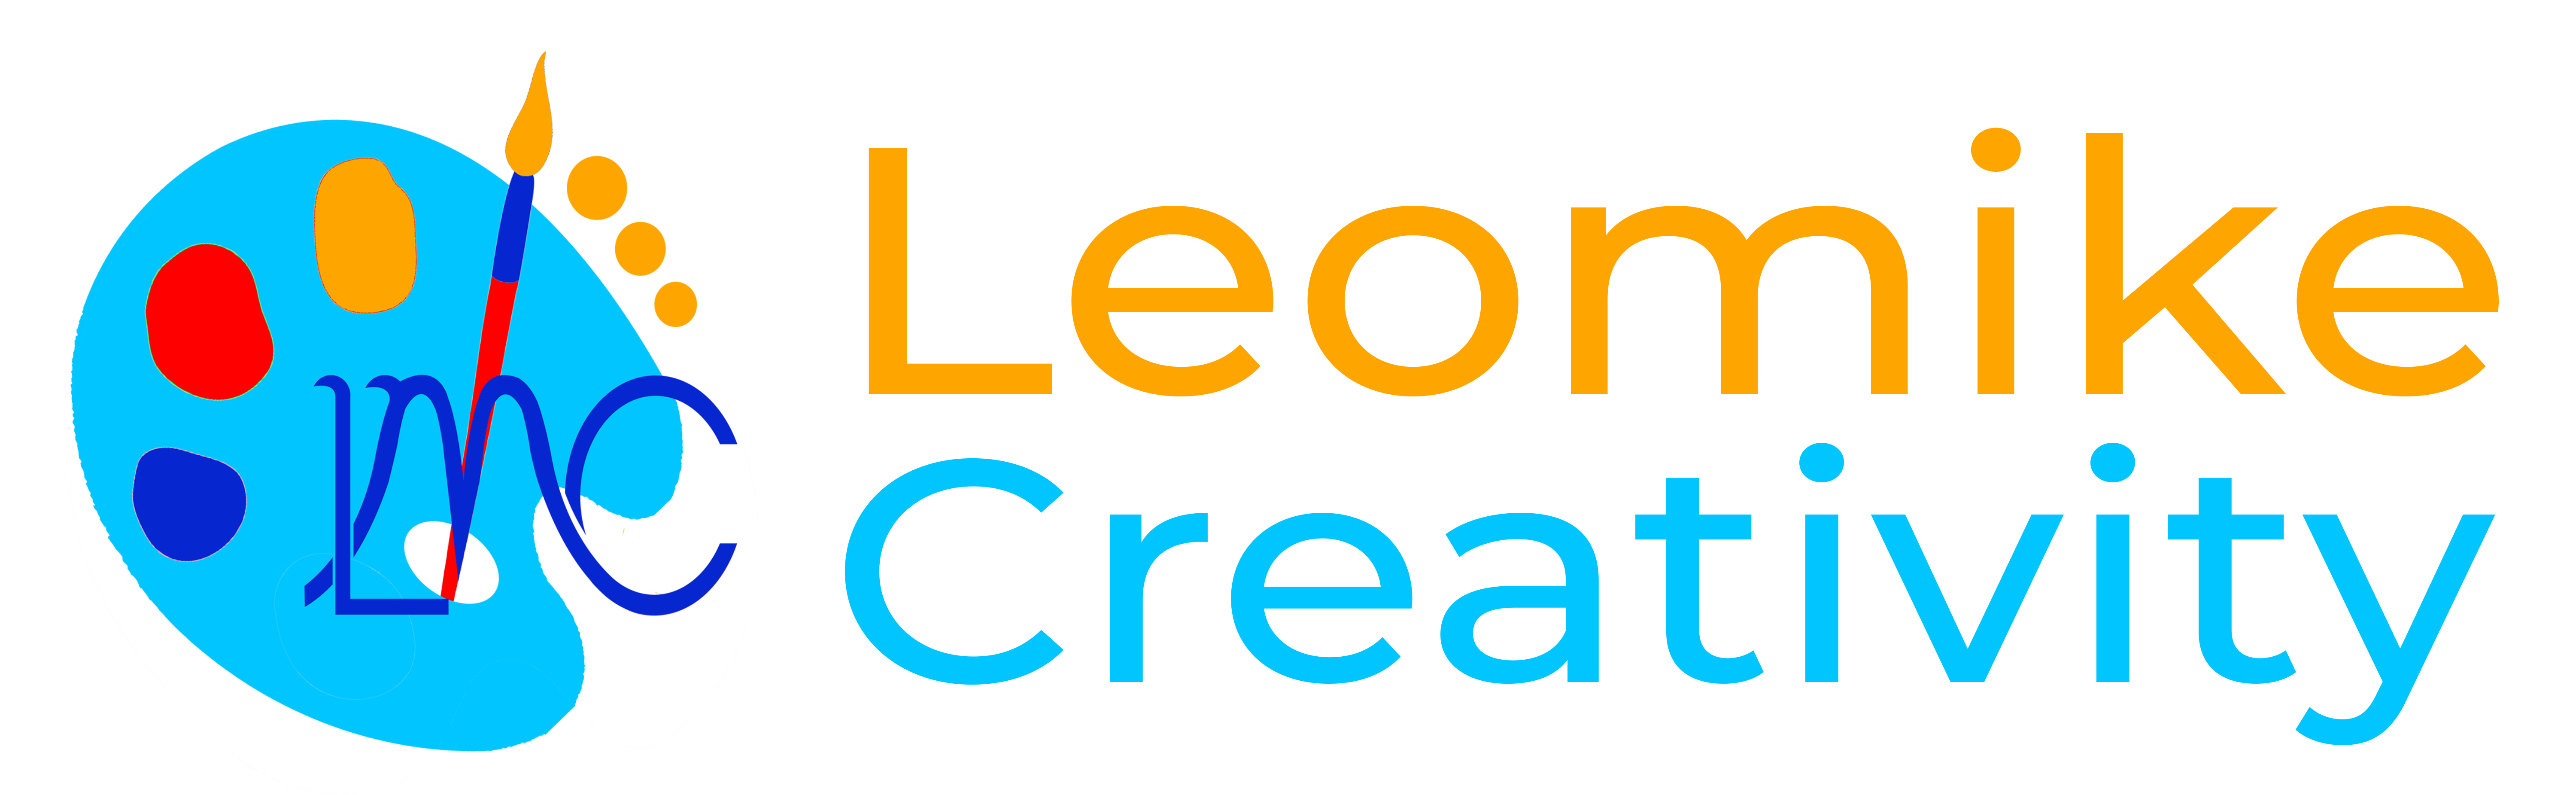 leomike-creativity-new-logo-rebranded-horizontal-orange-and-blue